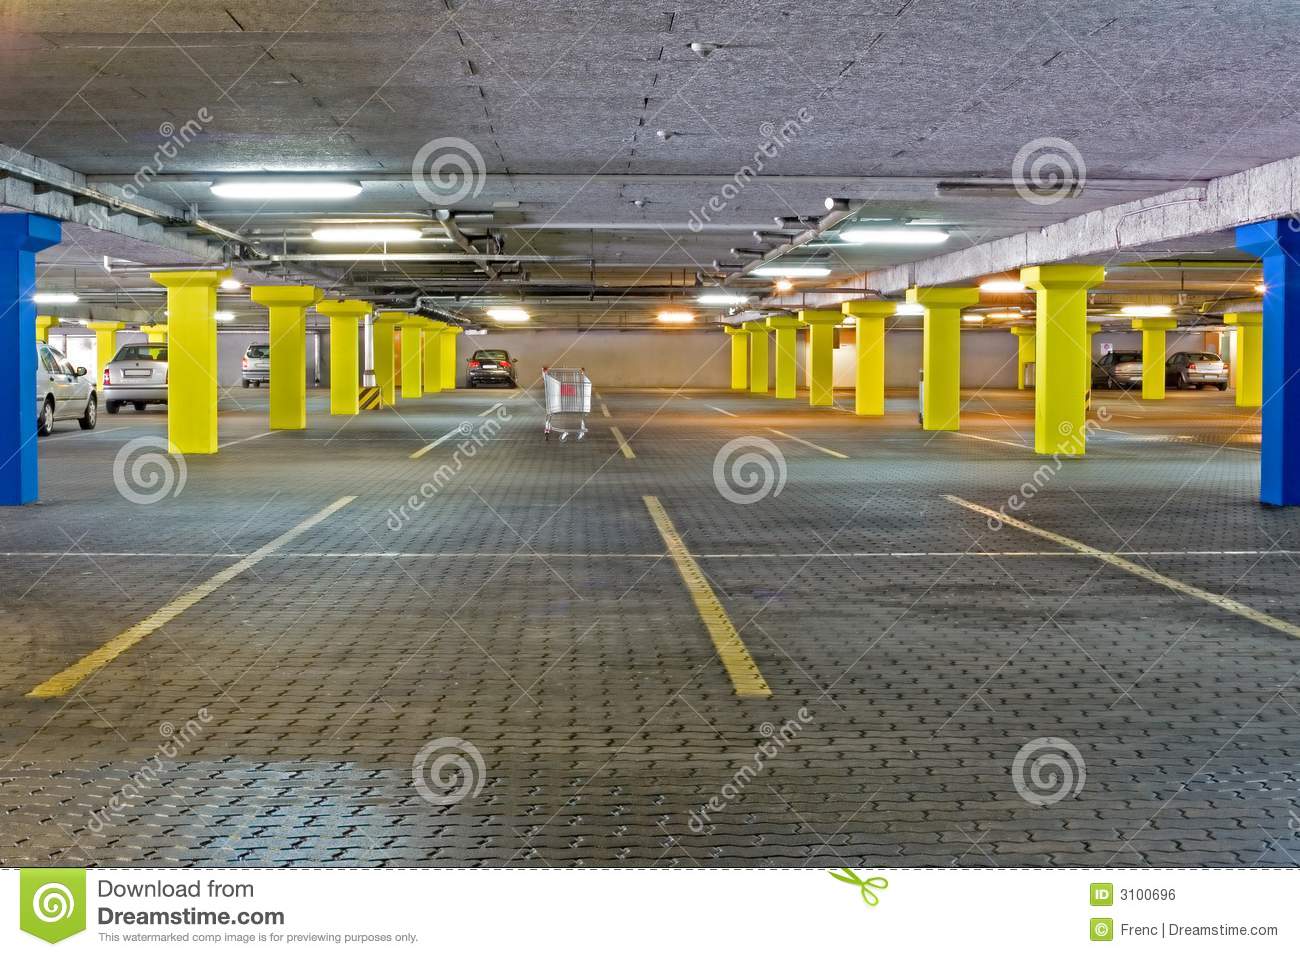 Empty Parking Lot Royalty Free Stock Image   Image  3100696